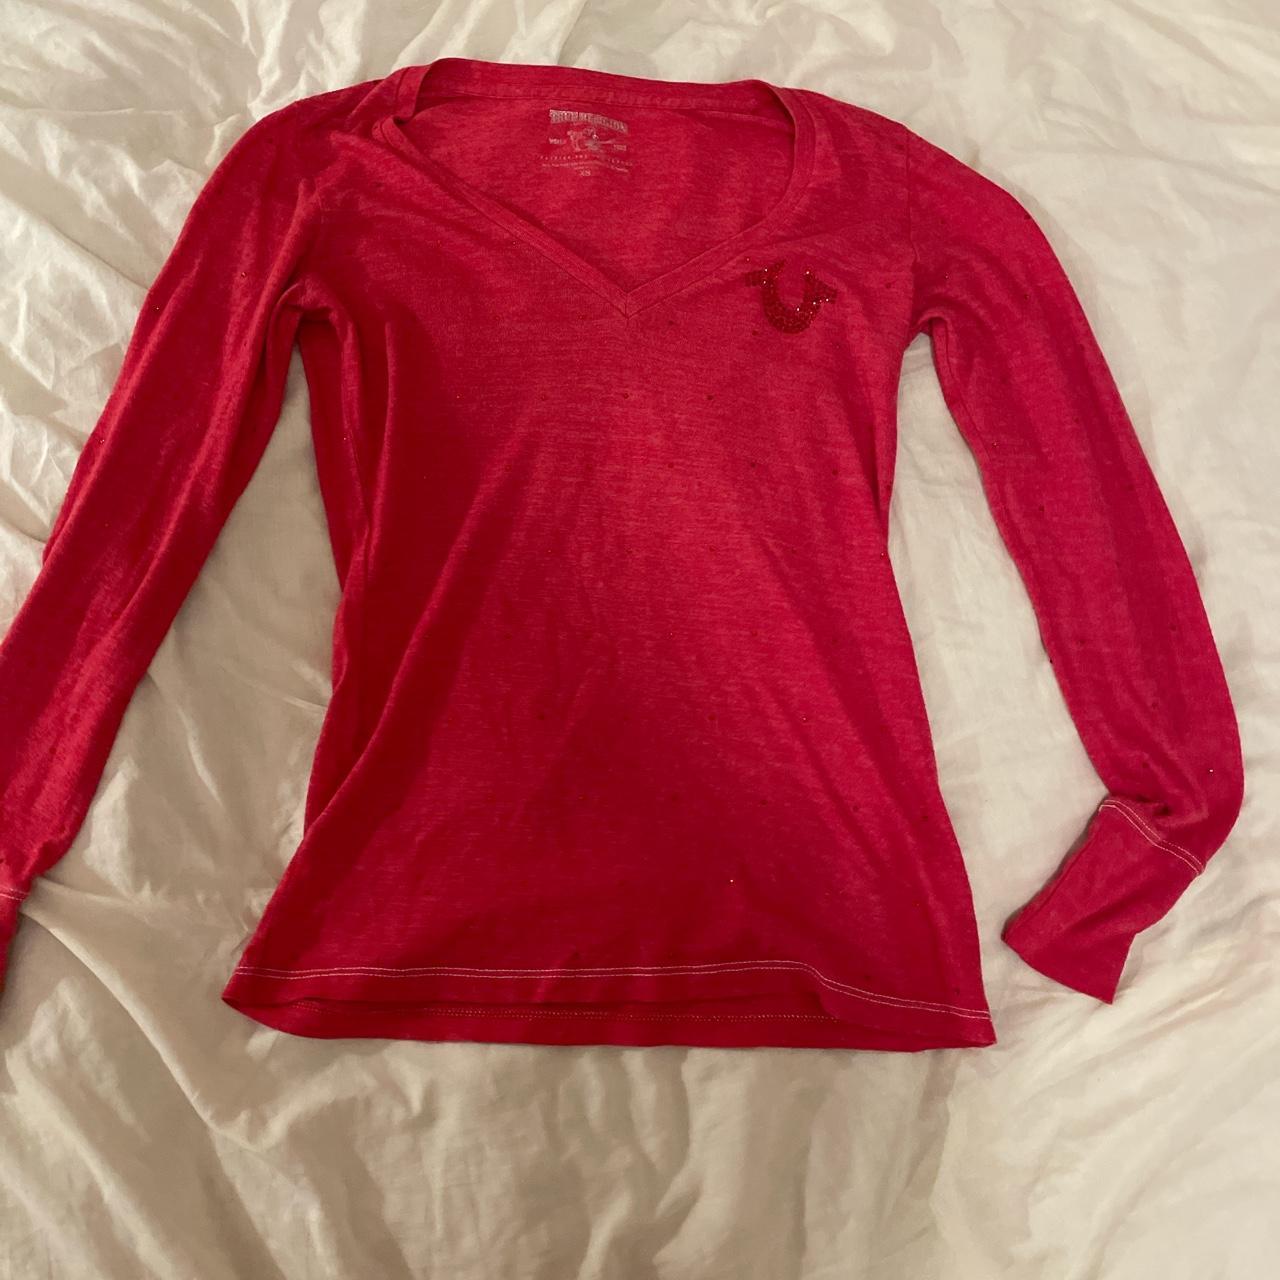 True Religion Women's Red Shirt